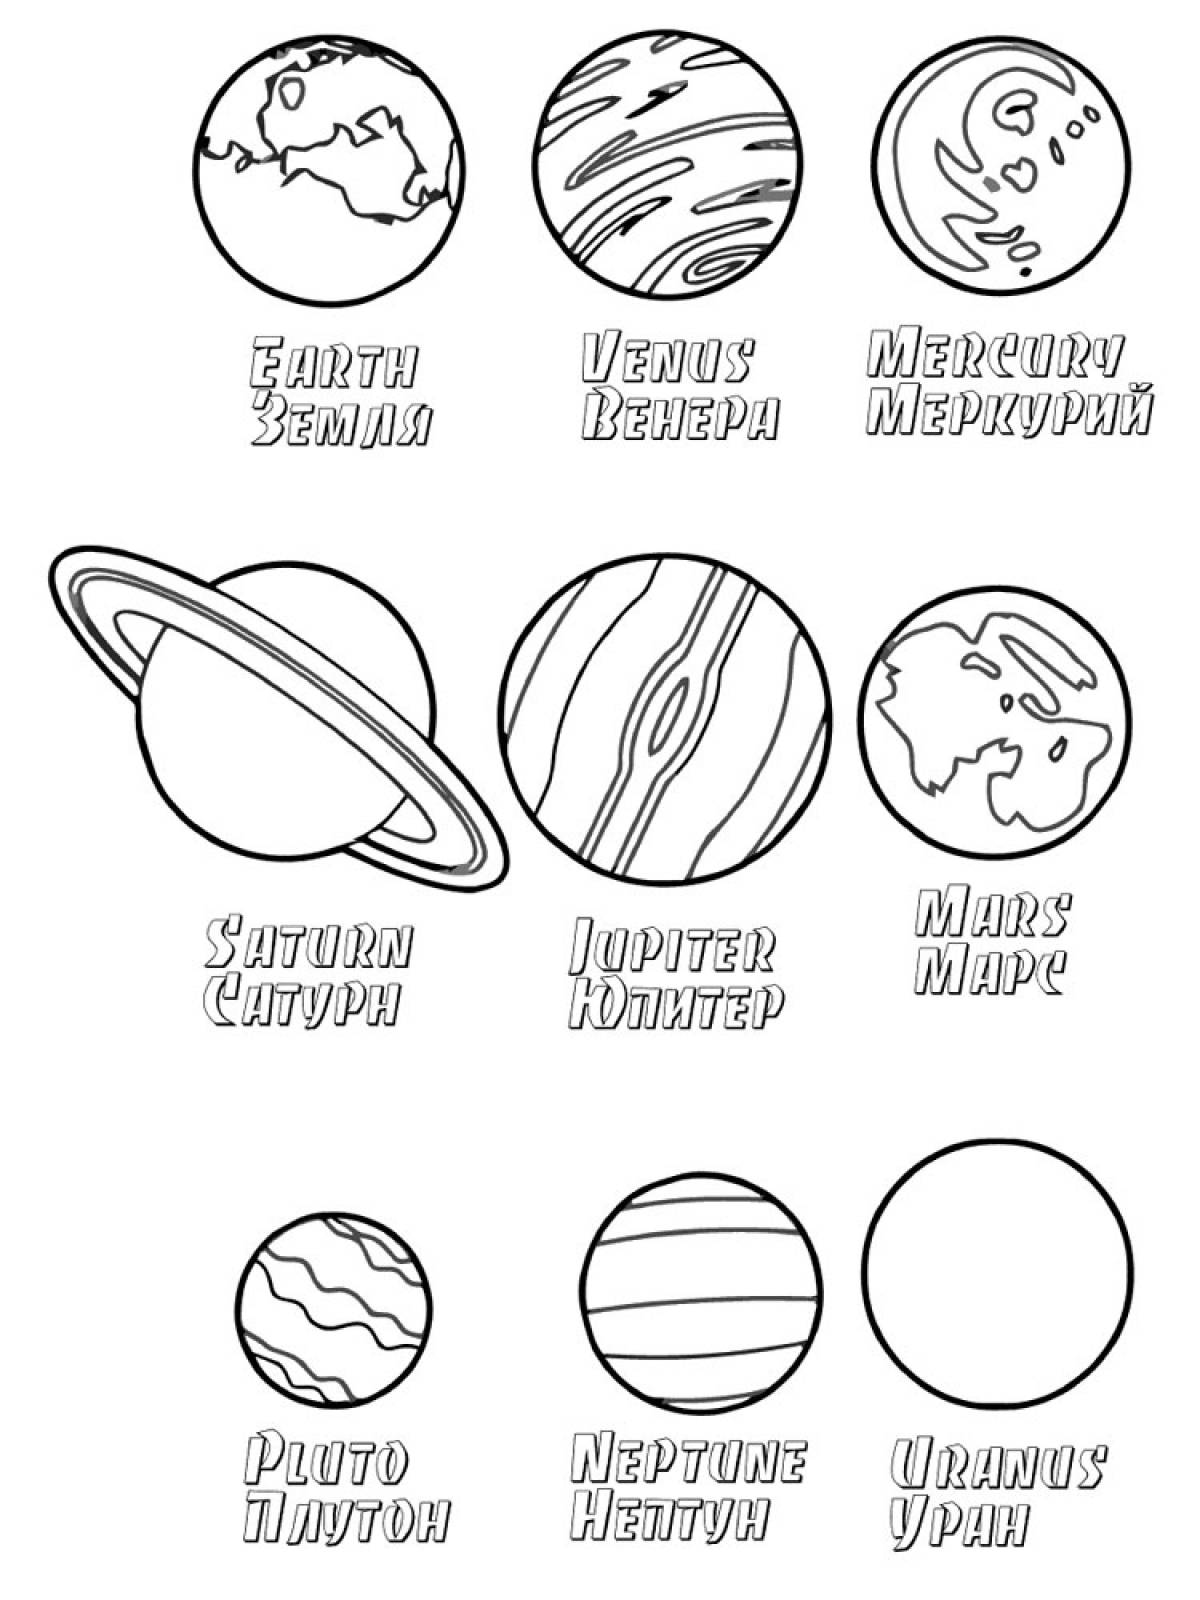 Solar system 9